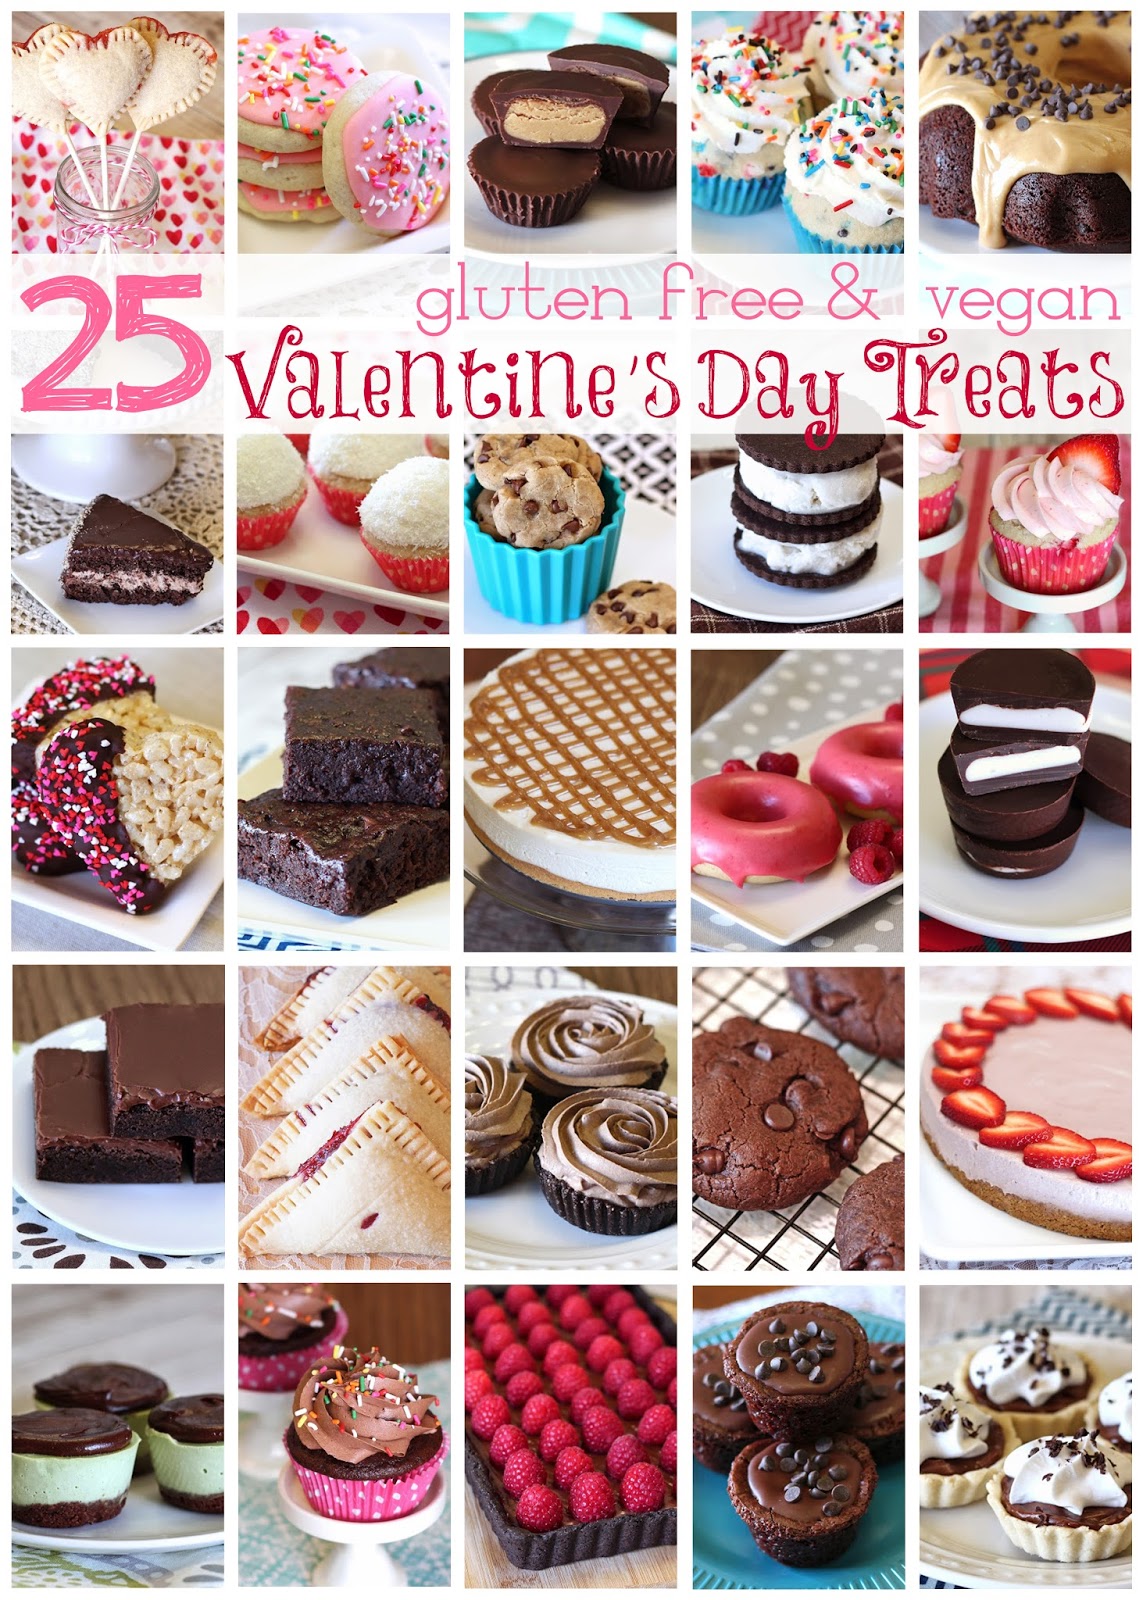 25 gluten free & vegan valentine's day treats! - Sarah Bakes Gluten Free